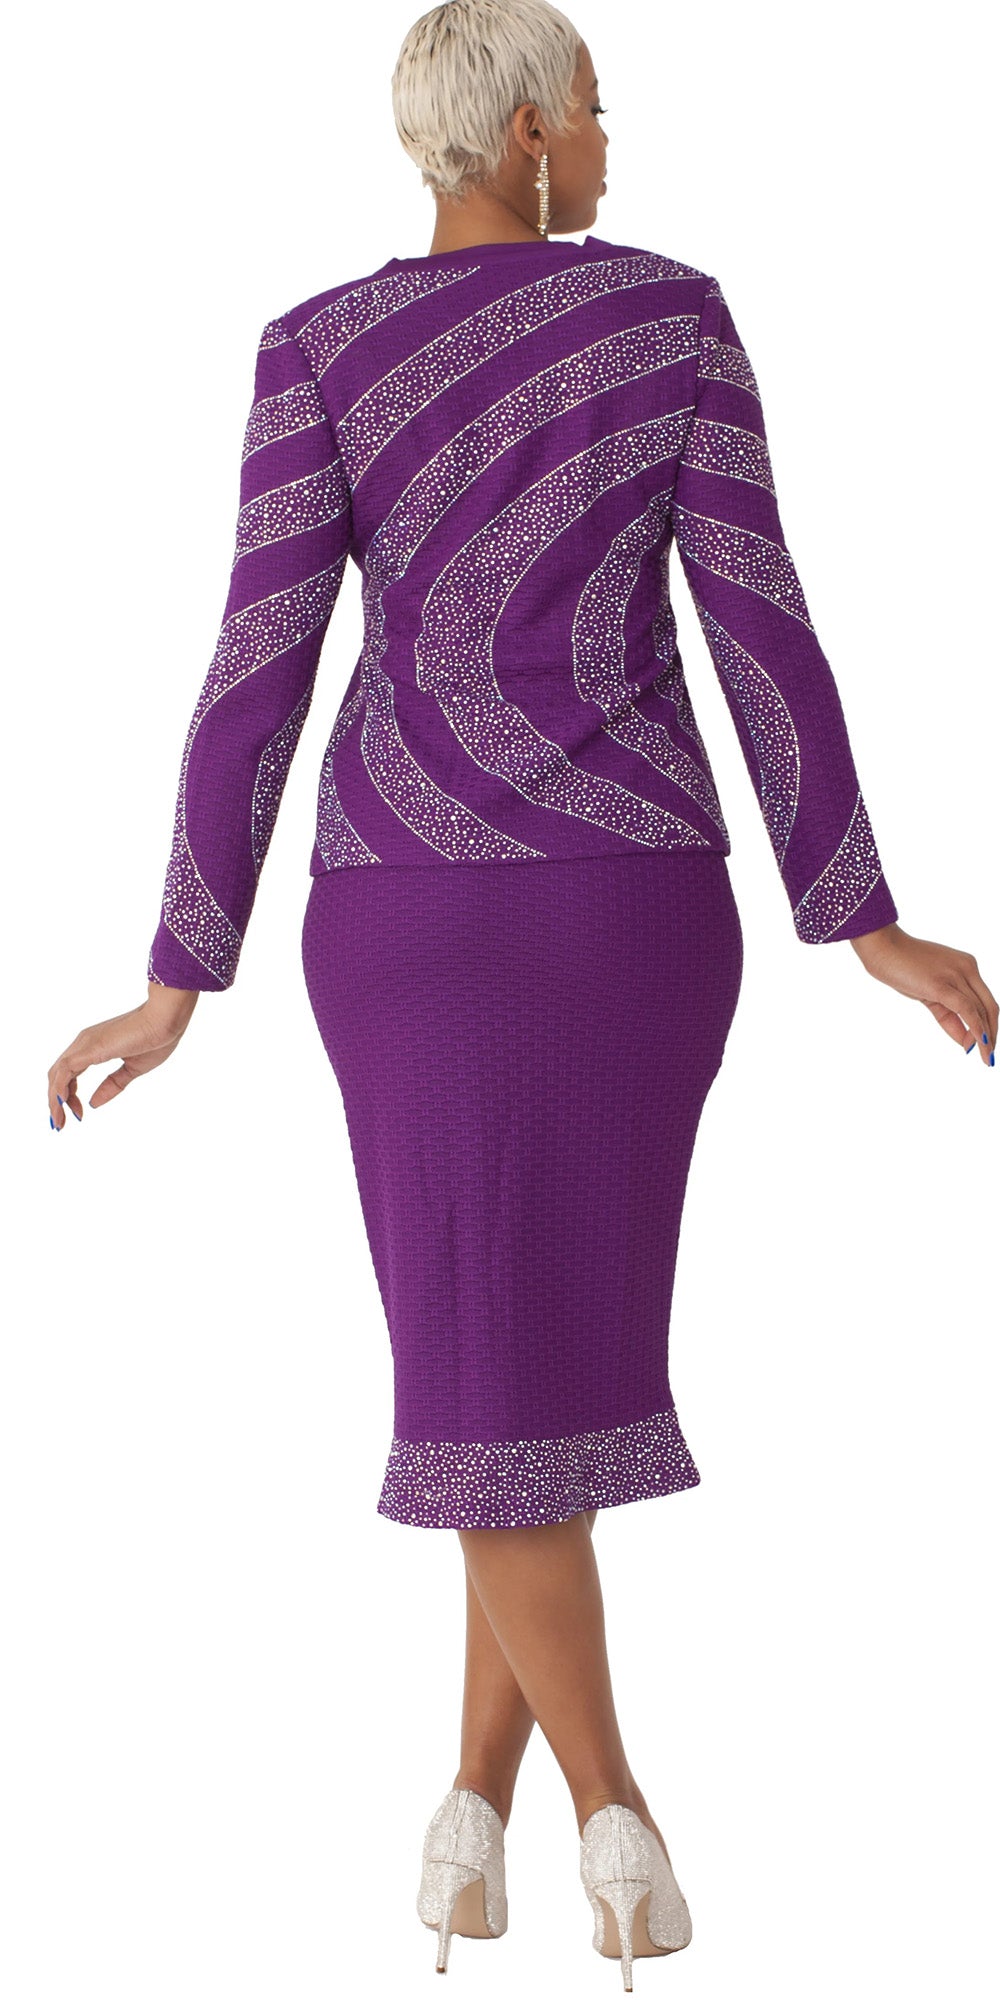 Liorah Knits 7305 - Purple - 2 PC Rhinestone Embellished Knit Skirt Suit